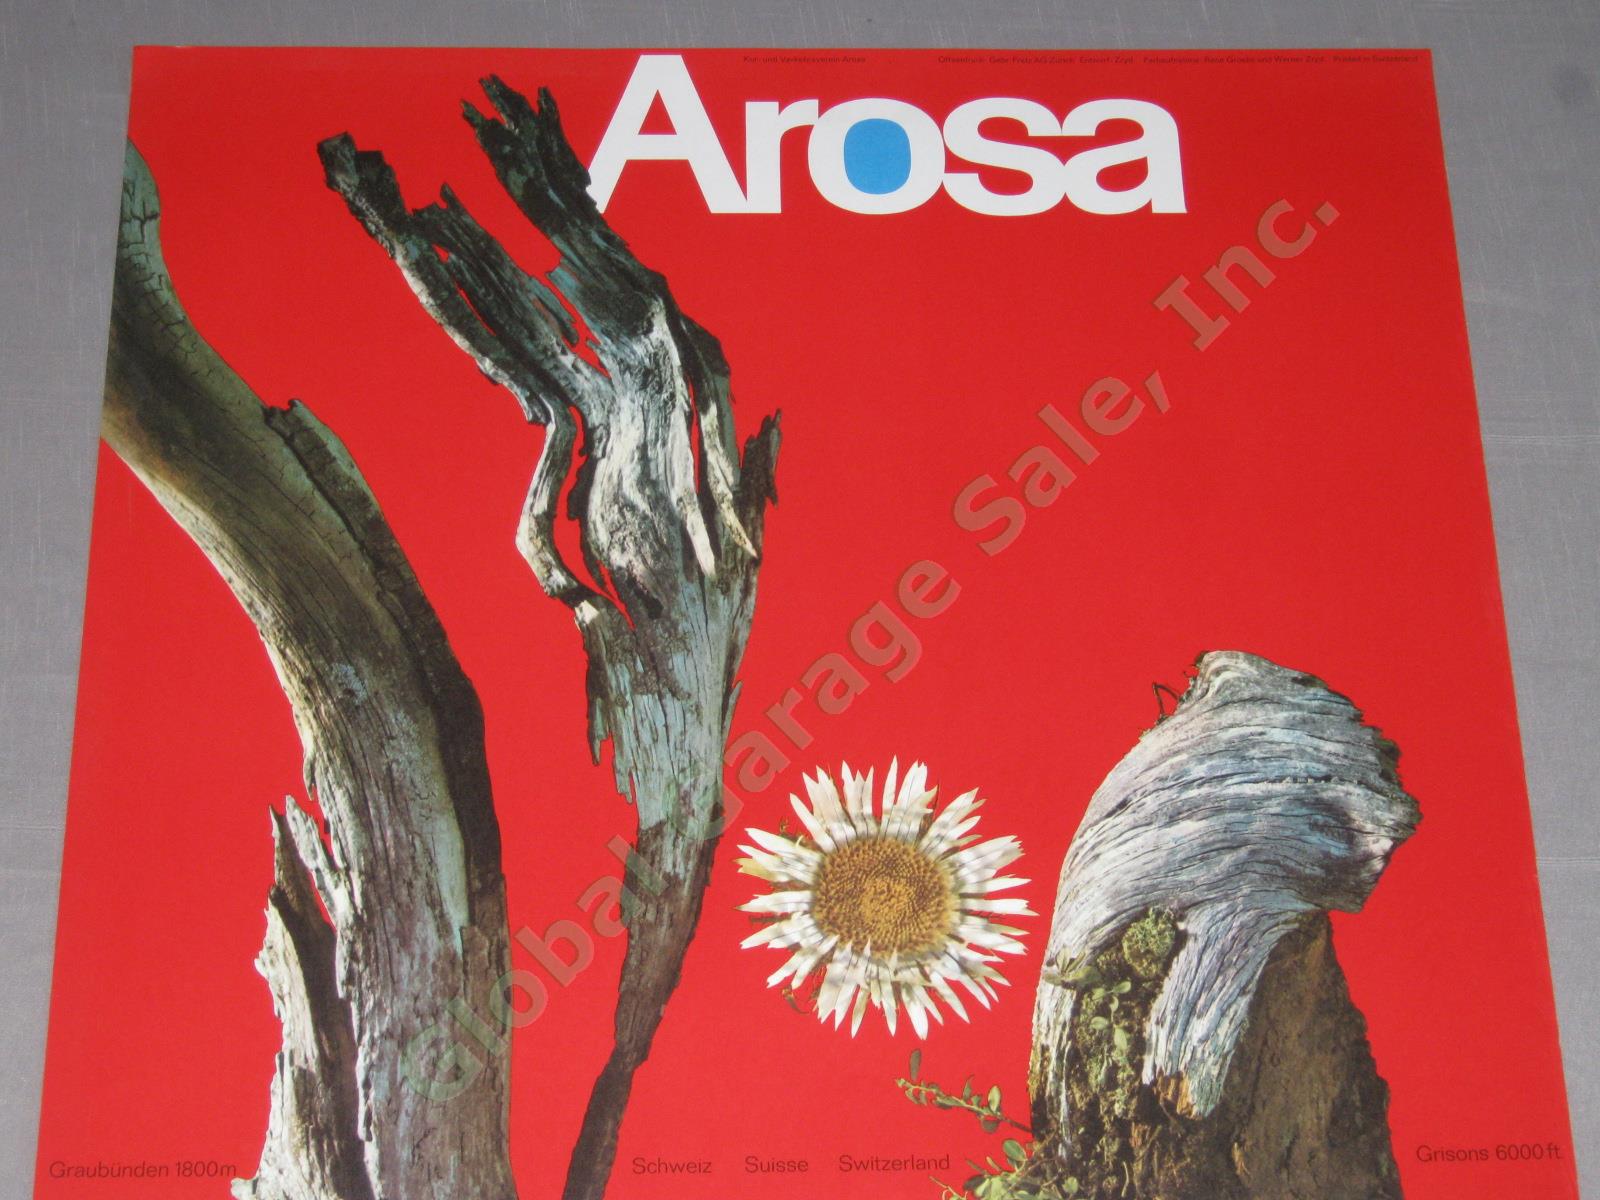 Vintage Original c1970 Swiss Travel Tourism Poster Arosa Switzerland No Reserve! 1